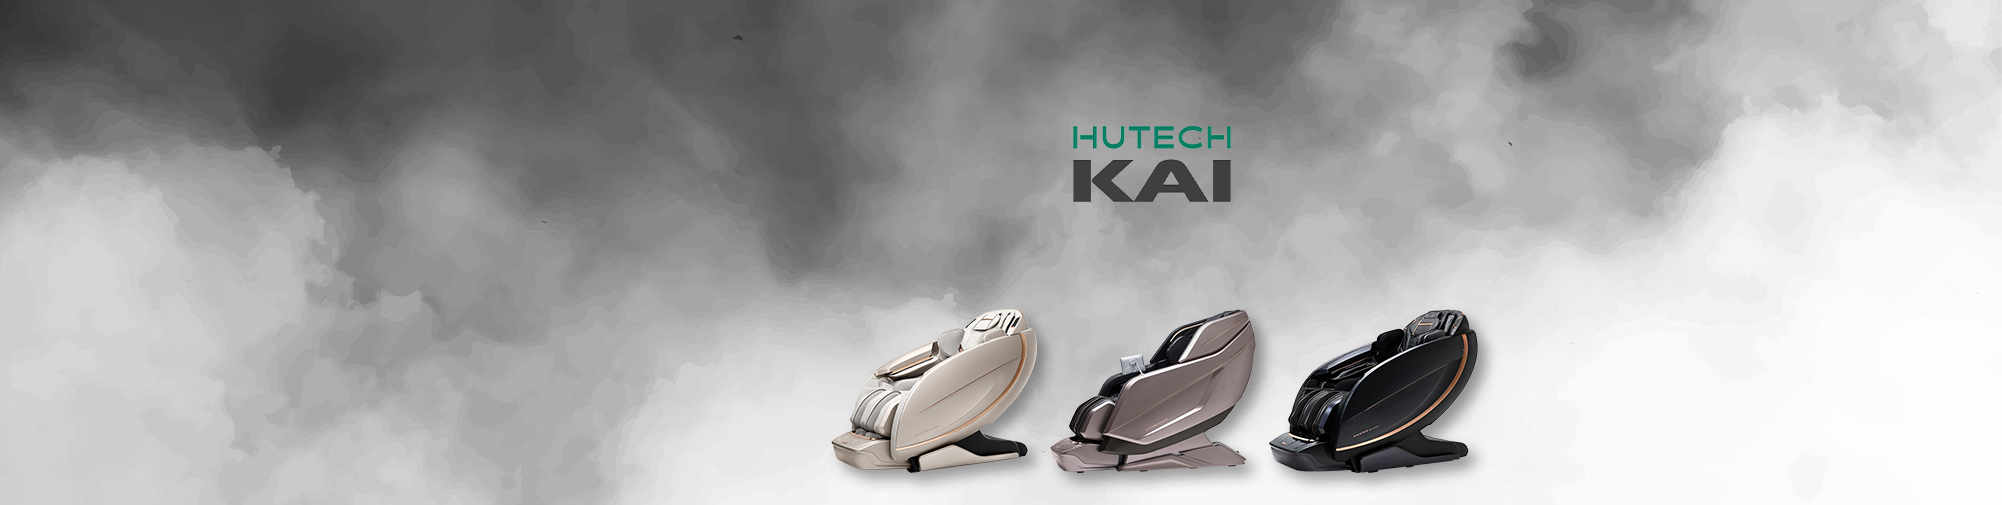 HUTECH KAI | Massage Chair World